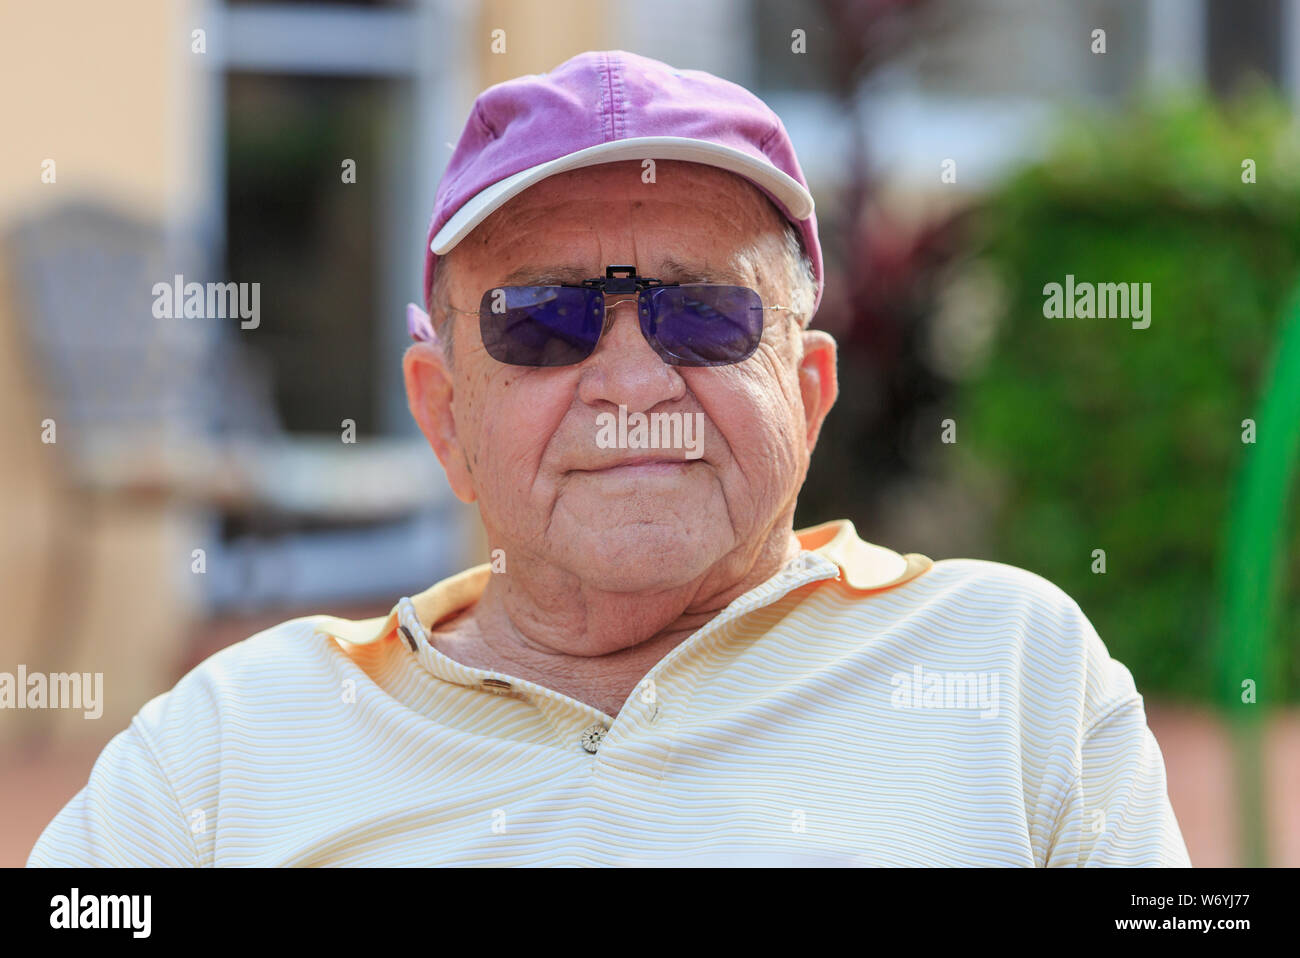 Portrait of happy senior man wearing sunglasses Stock Photo